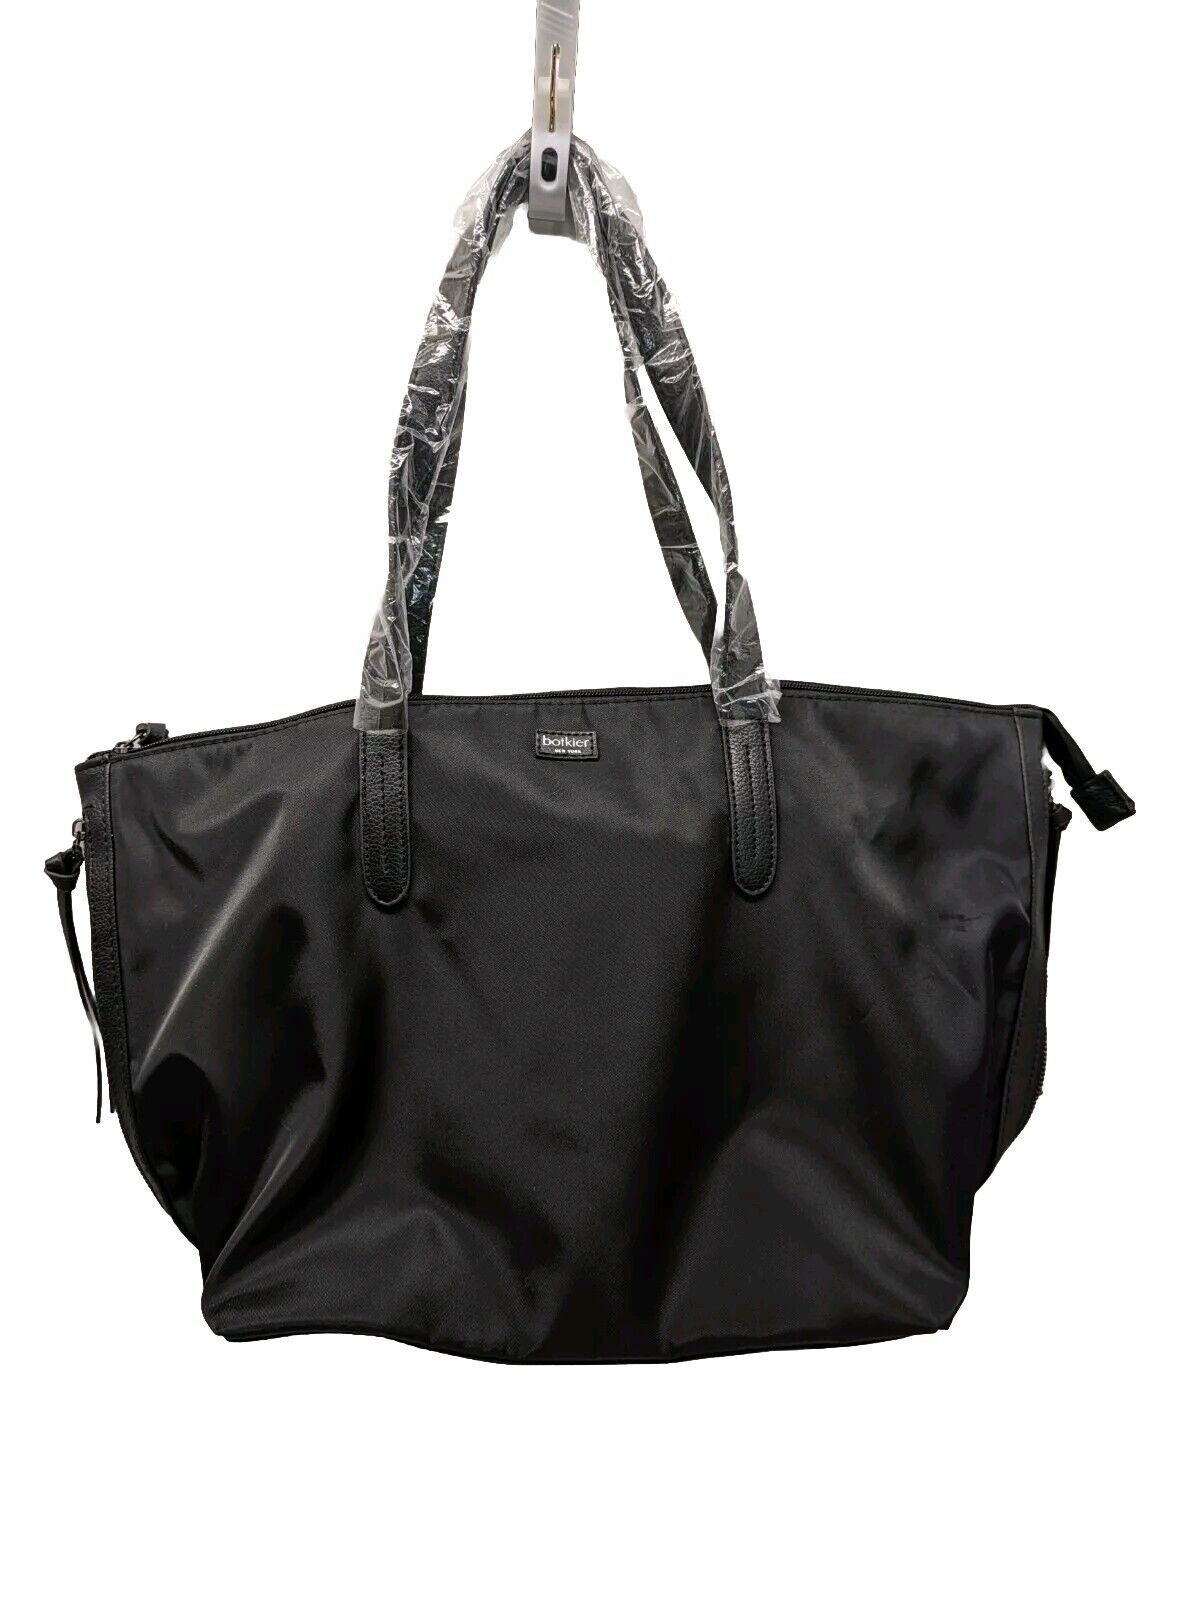 Botkier New York Black Nylon Bond Tote Bag Decorative Side Zippers Zip Close